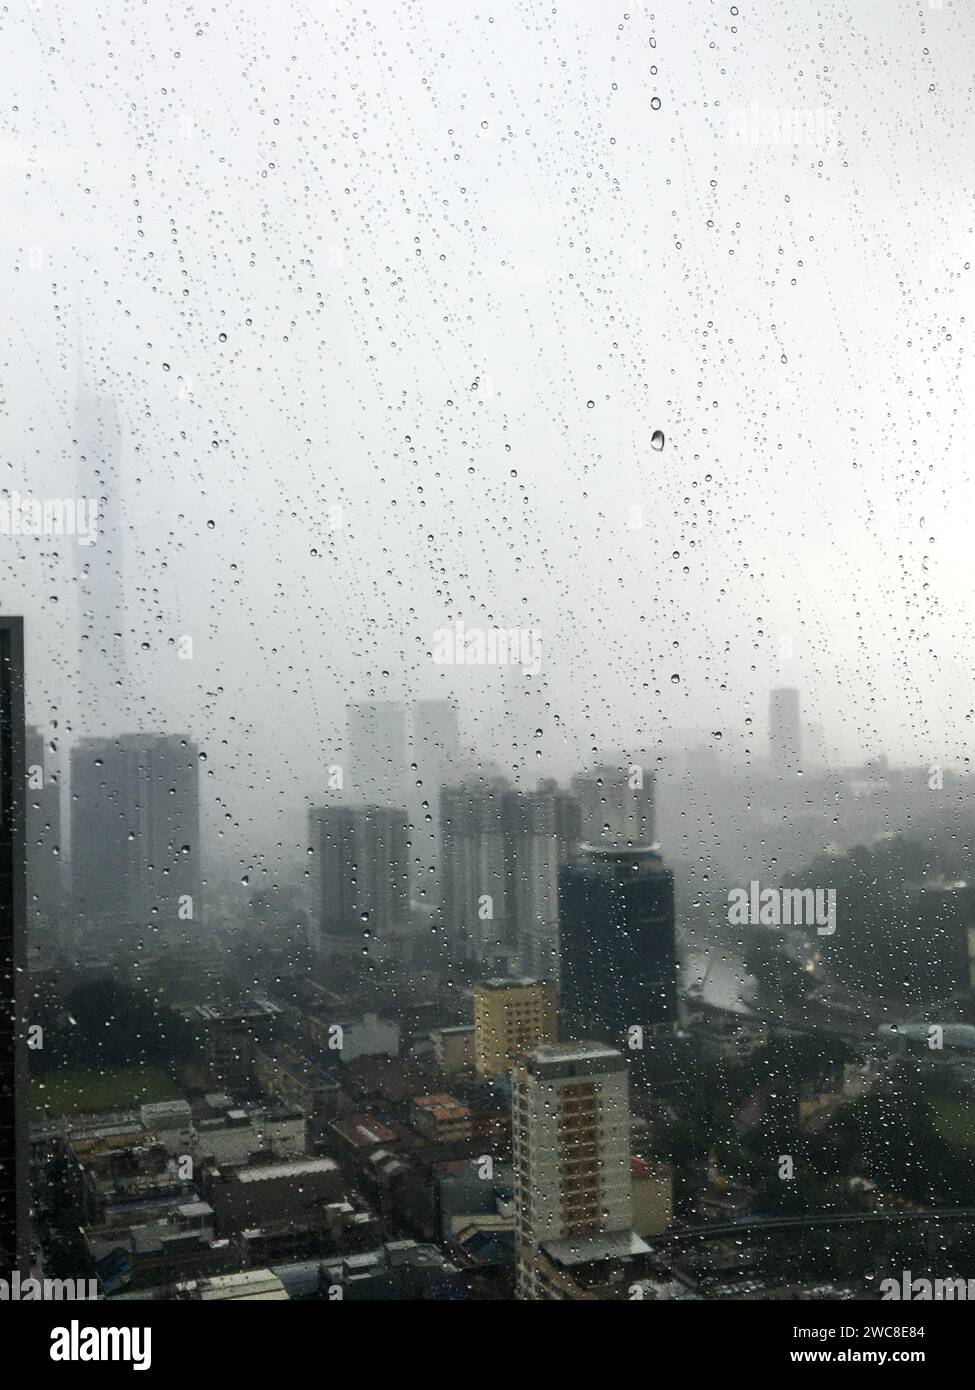 Drops of rain on the office window. Aerial view of  Malaysia. blur urban skyline background. rainy season concepts. Stock Photo